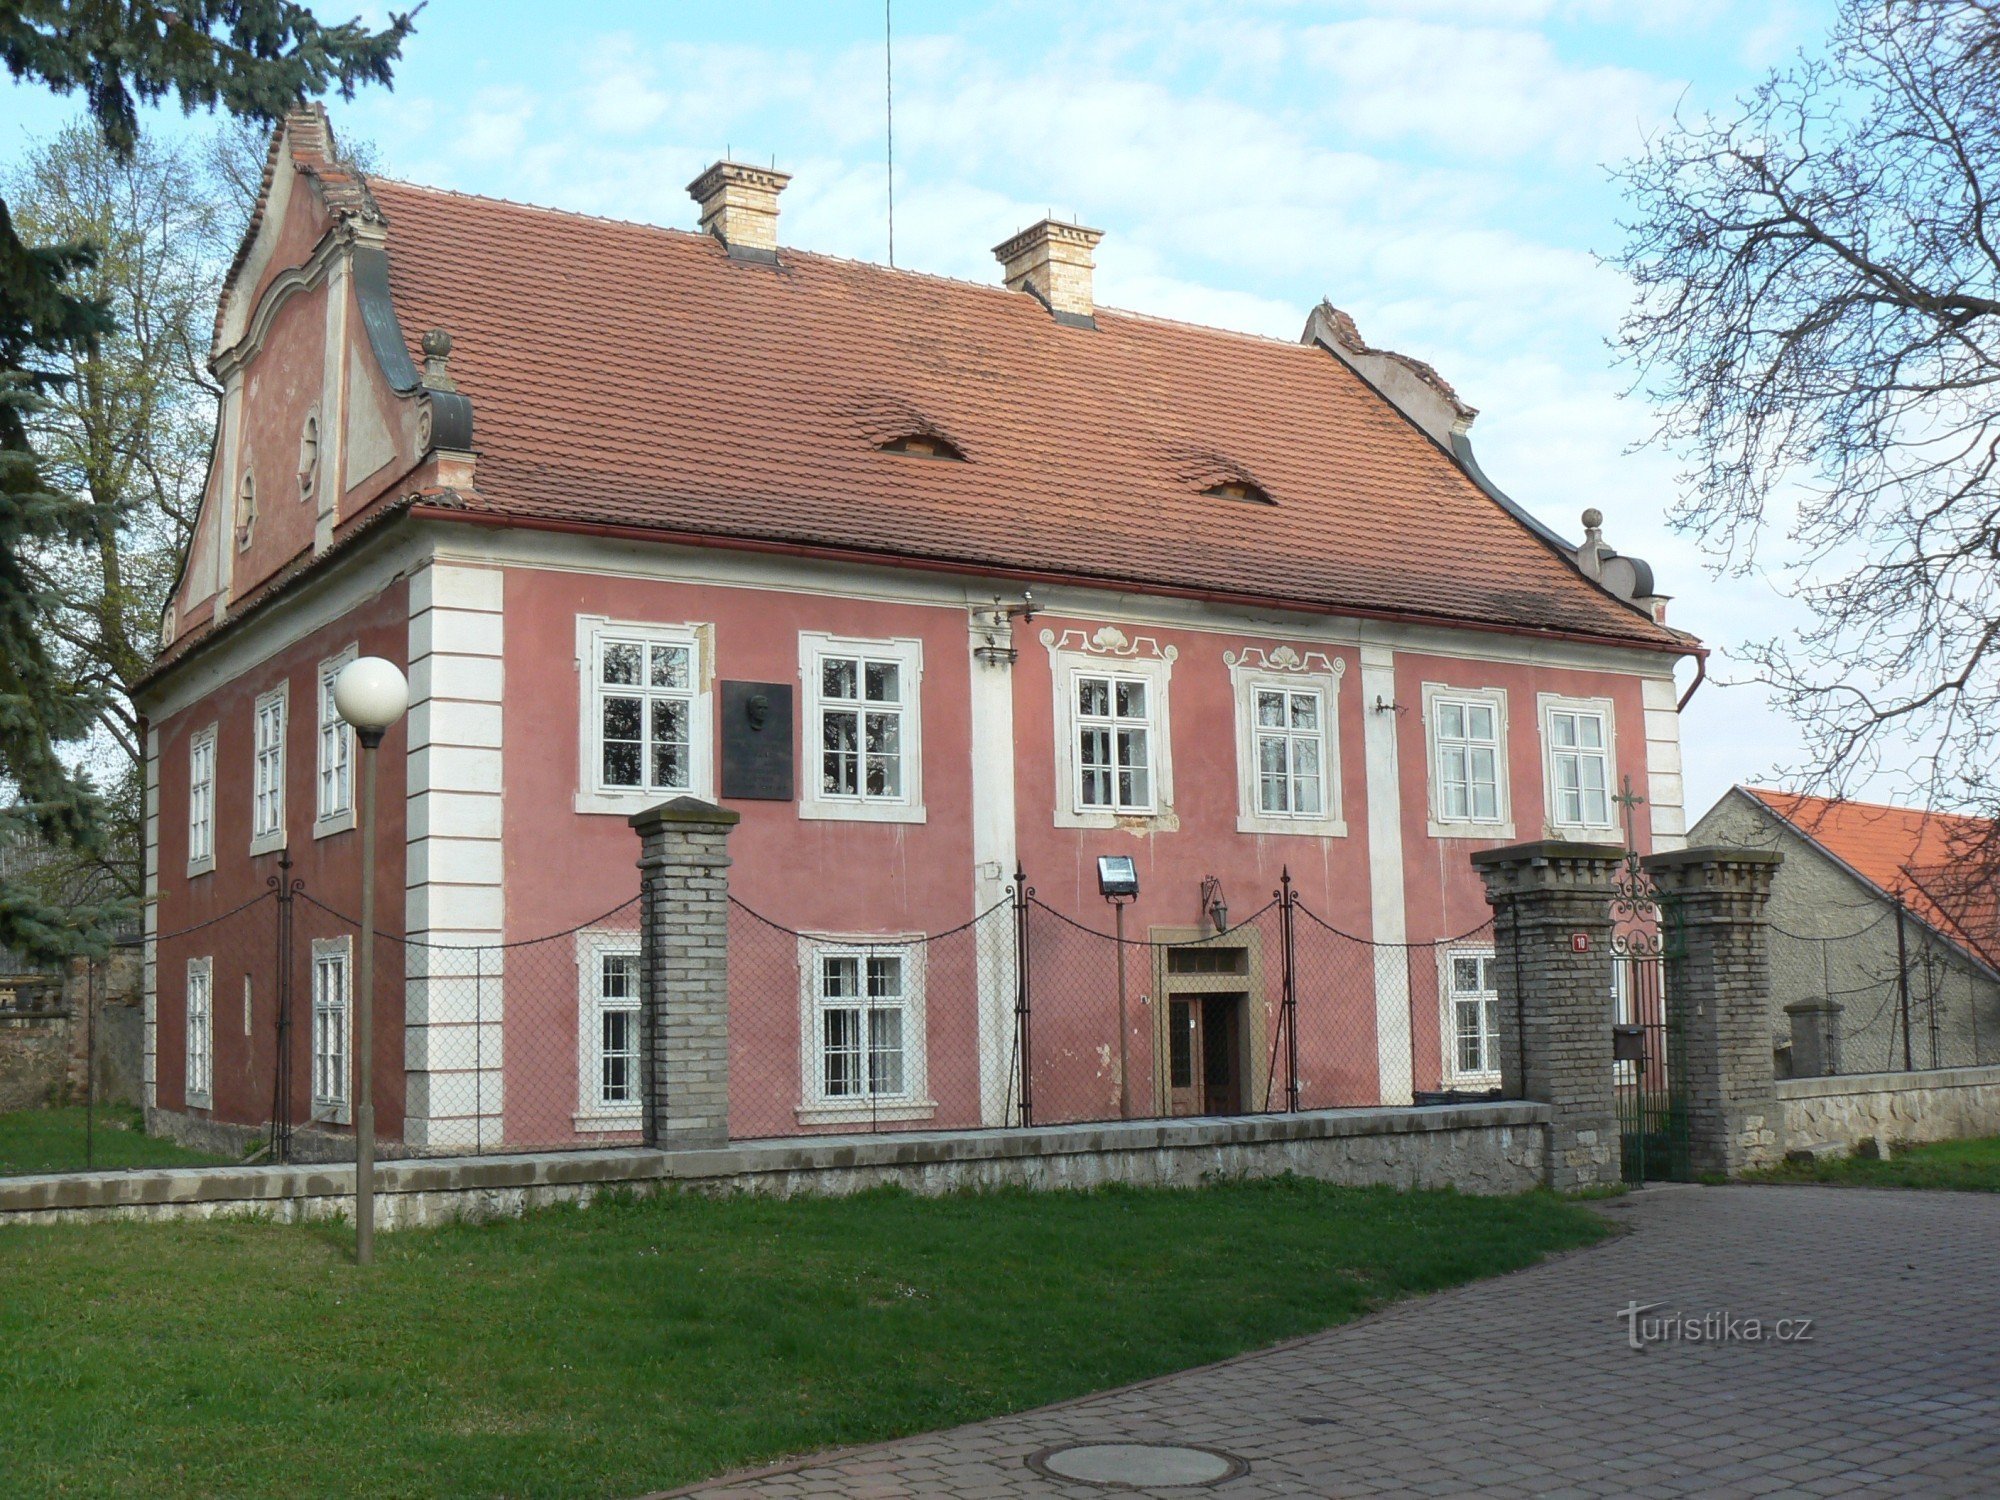 Orech、教会の後ろの家 10 番、J.Š. Baar の仕事場